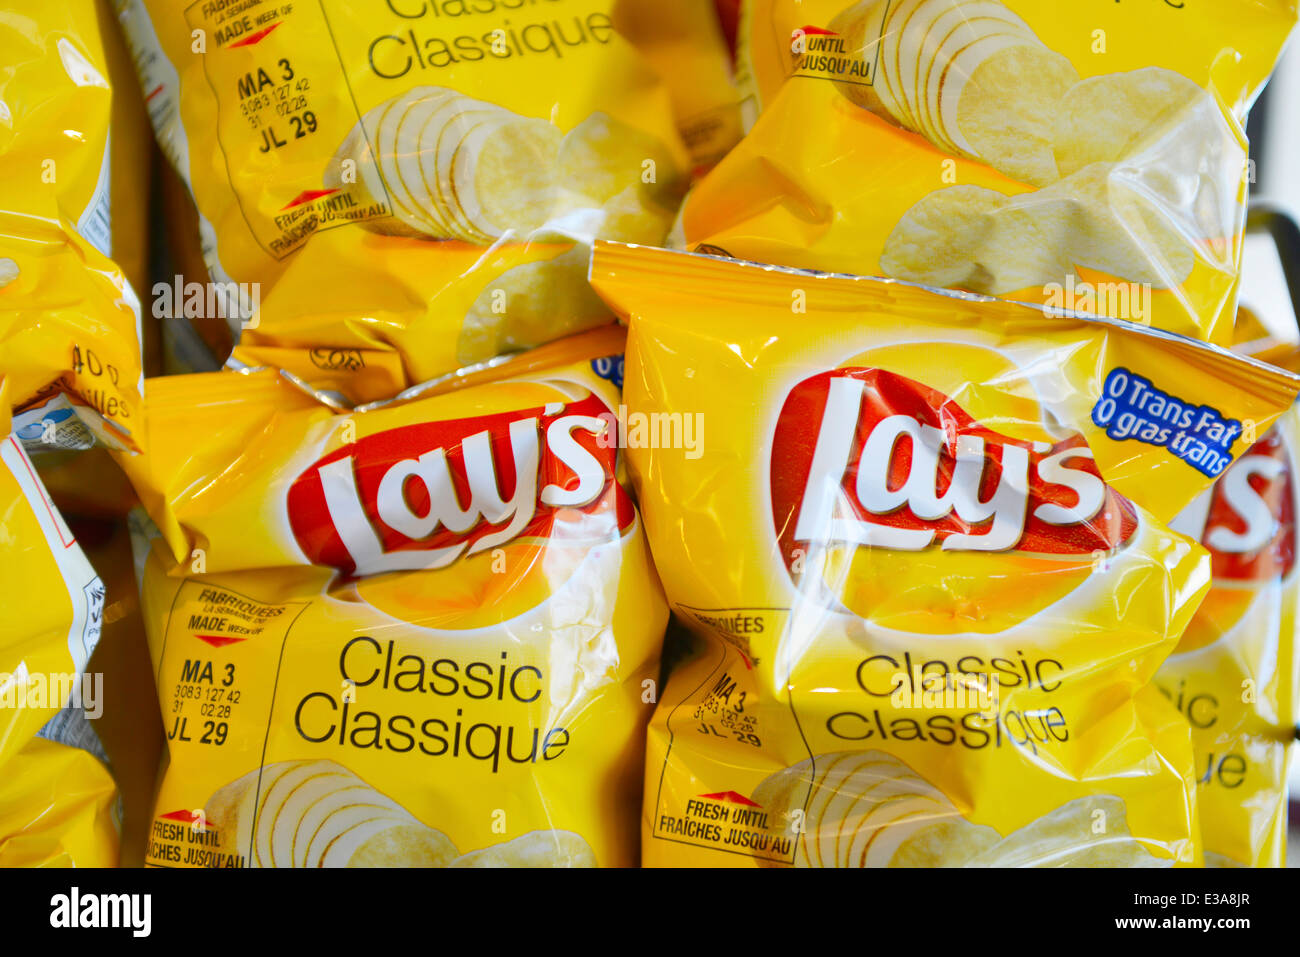 Lay's Potato Chips, Crisps, Packets of Crisps Stock Photo